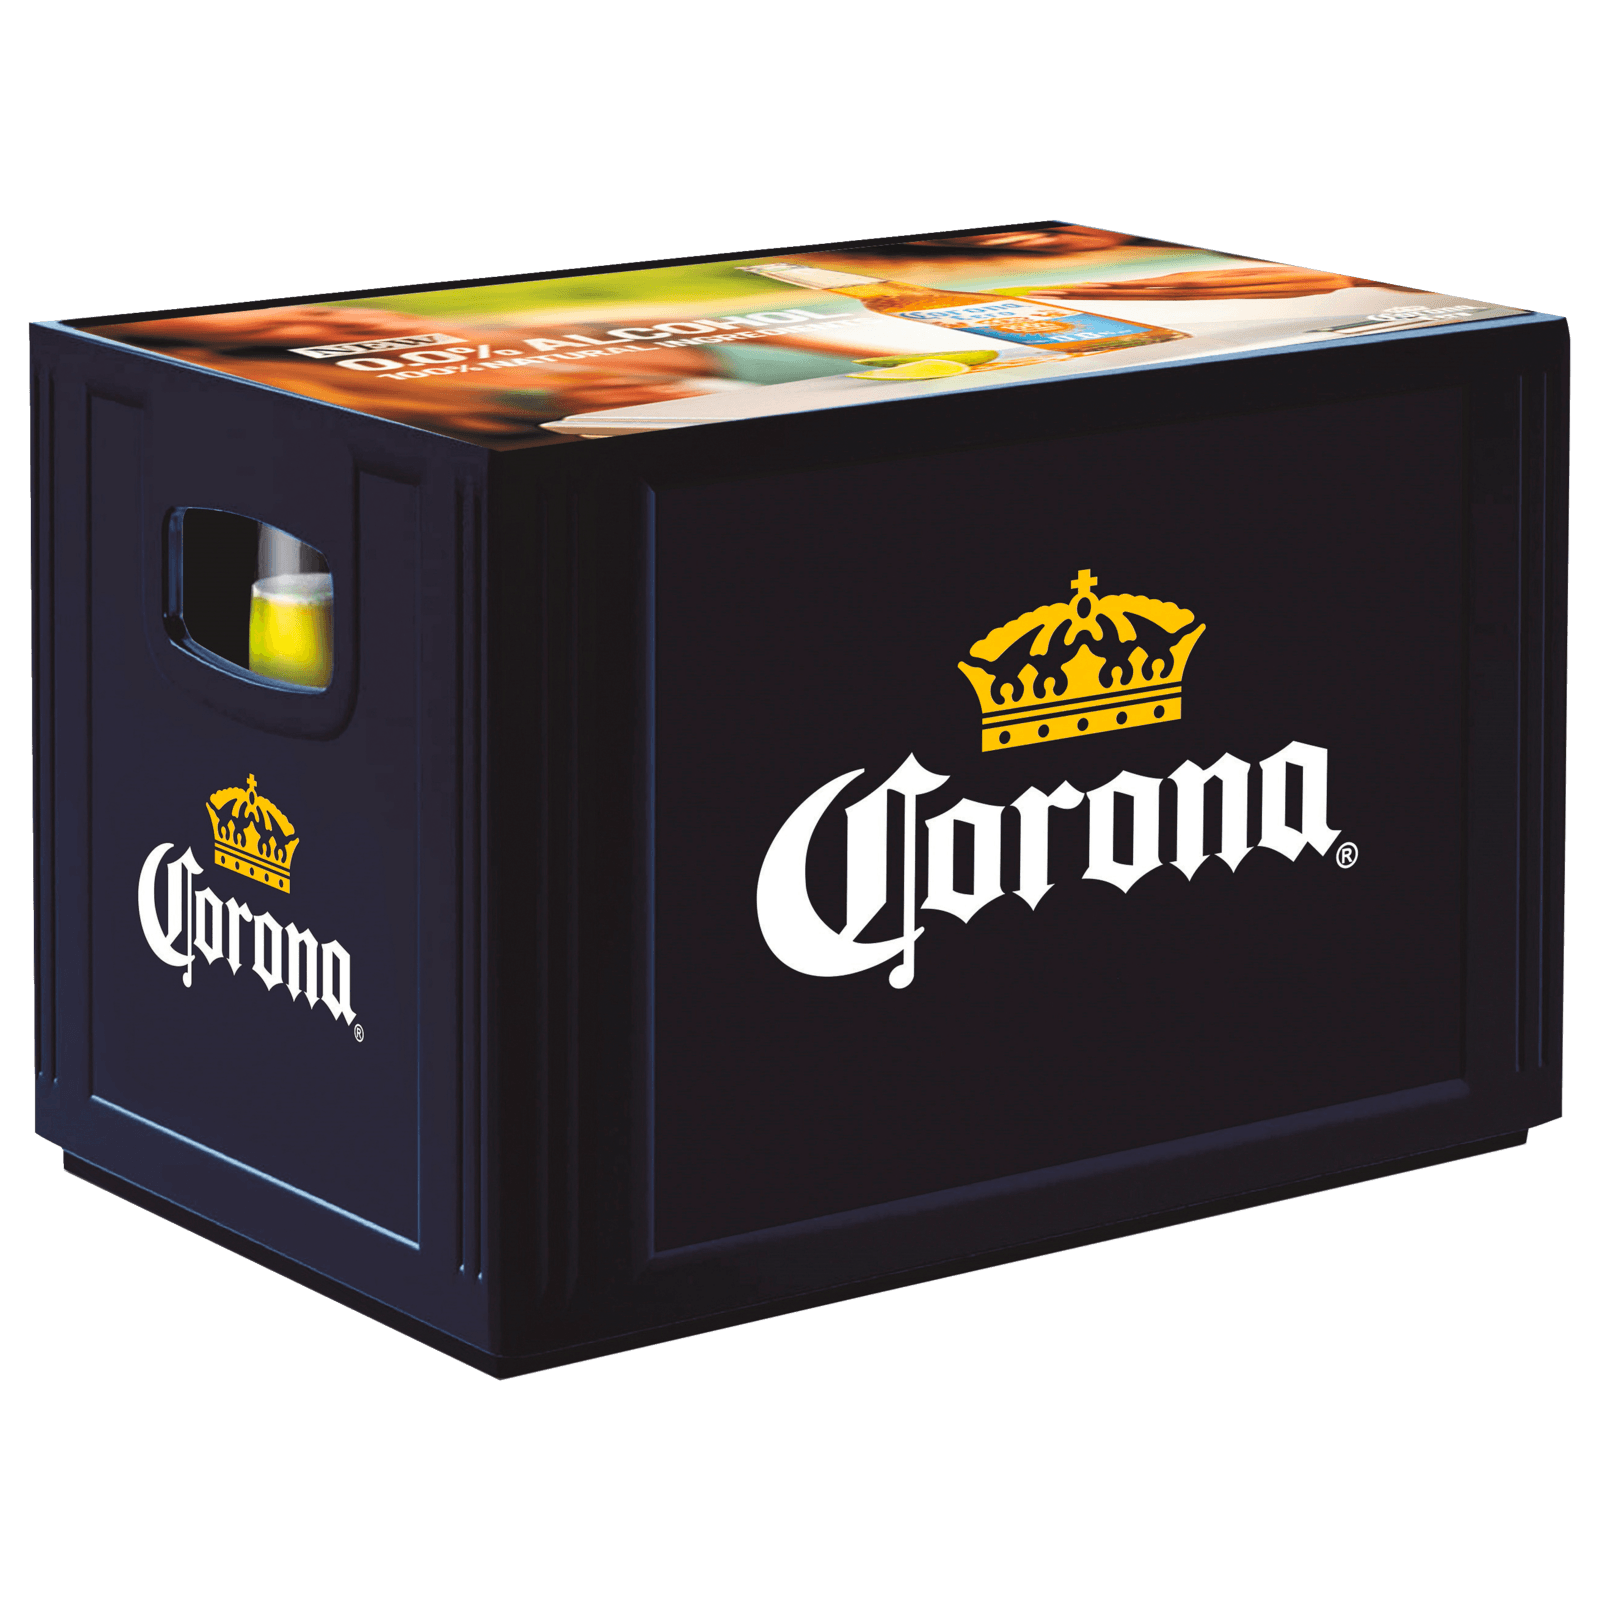 Corona 0.0% alkoholfrei 4x6x0,355l